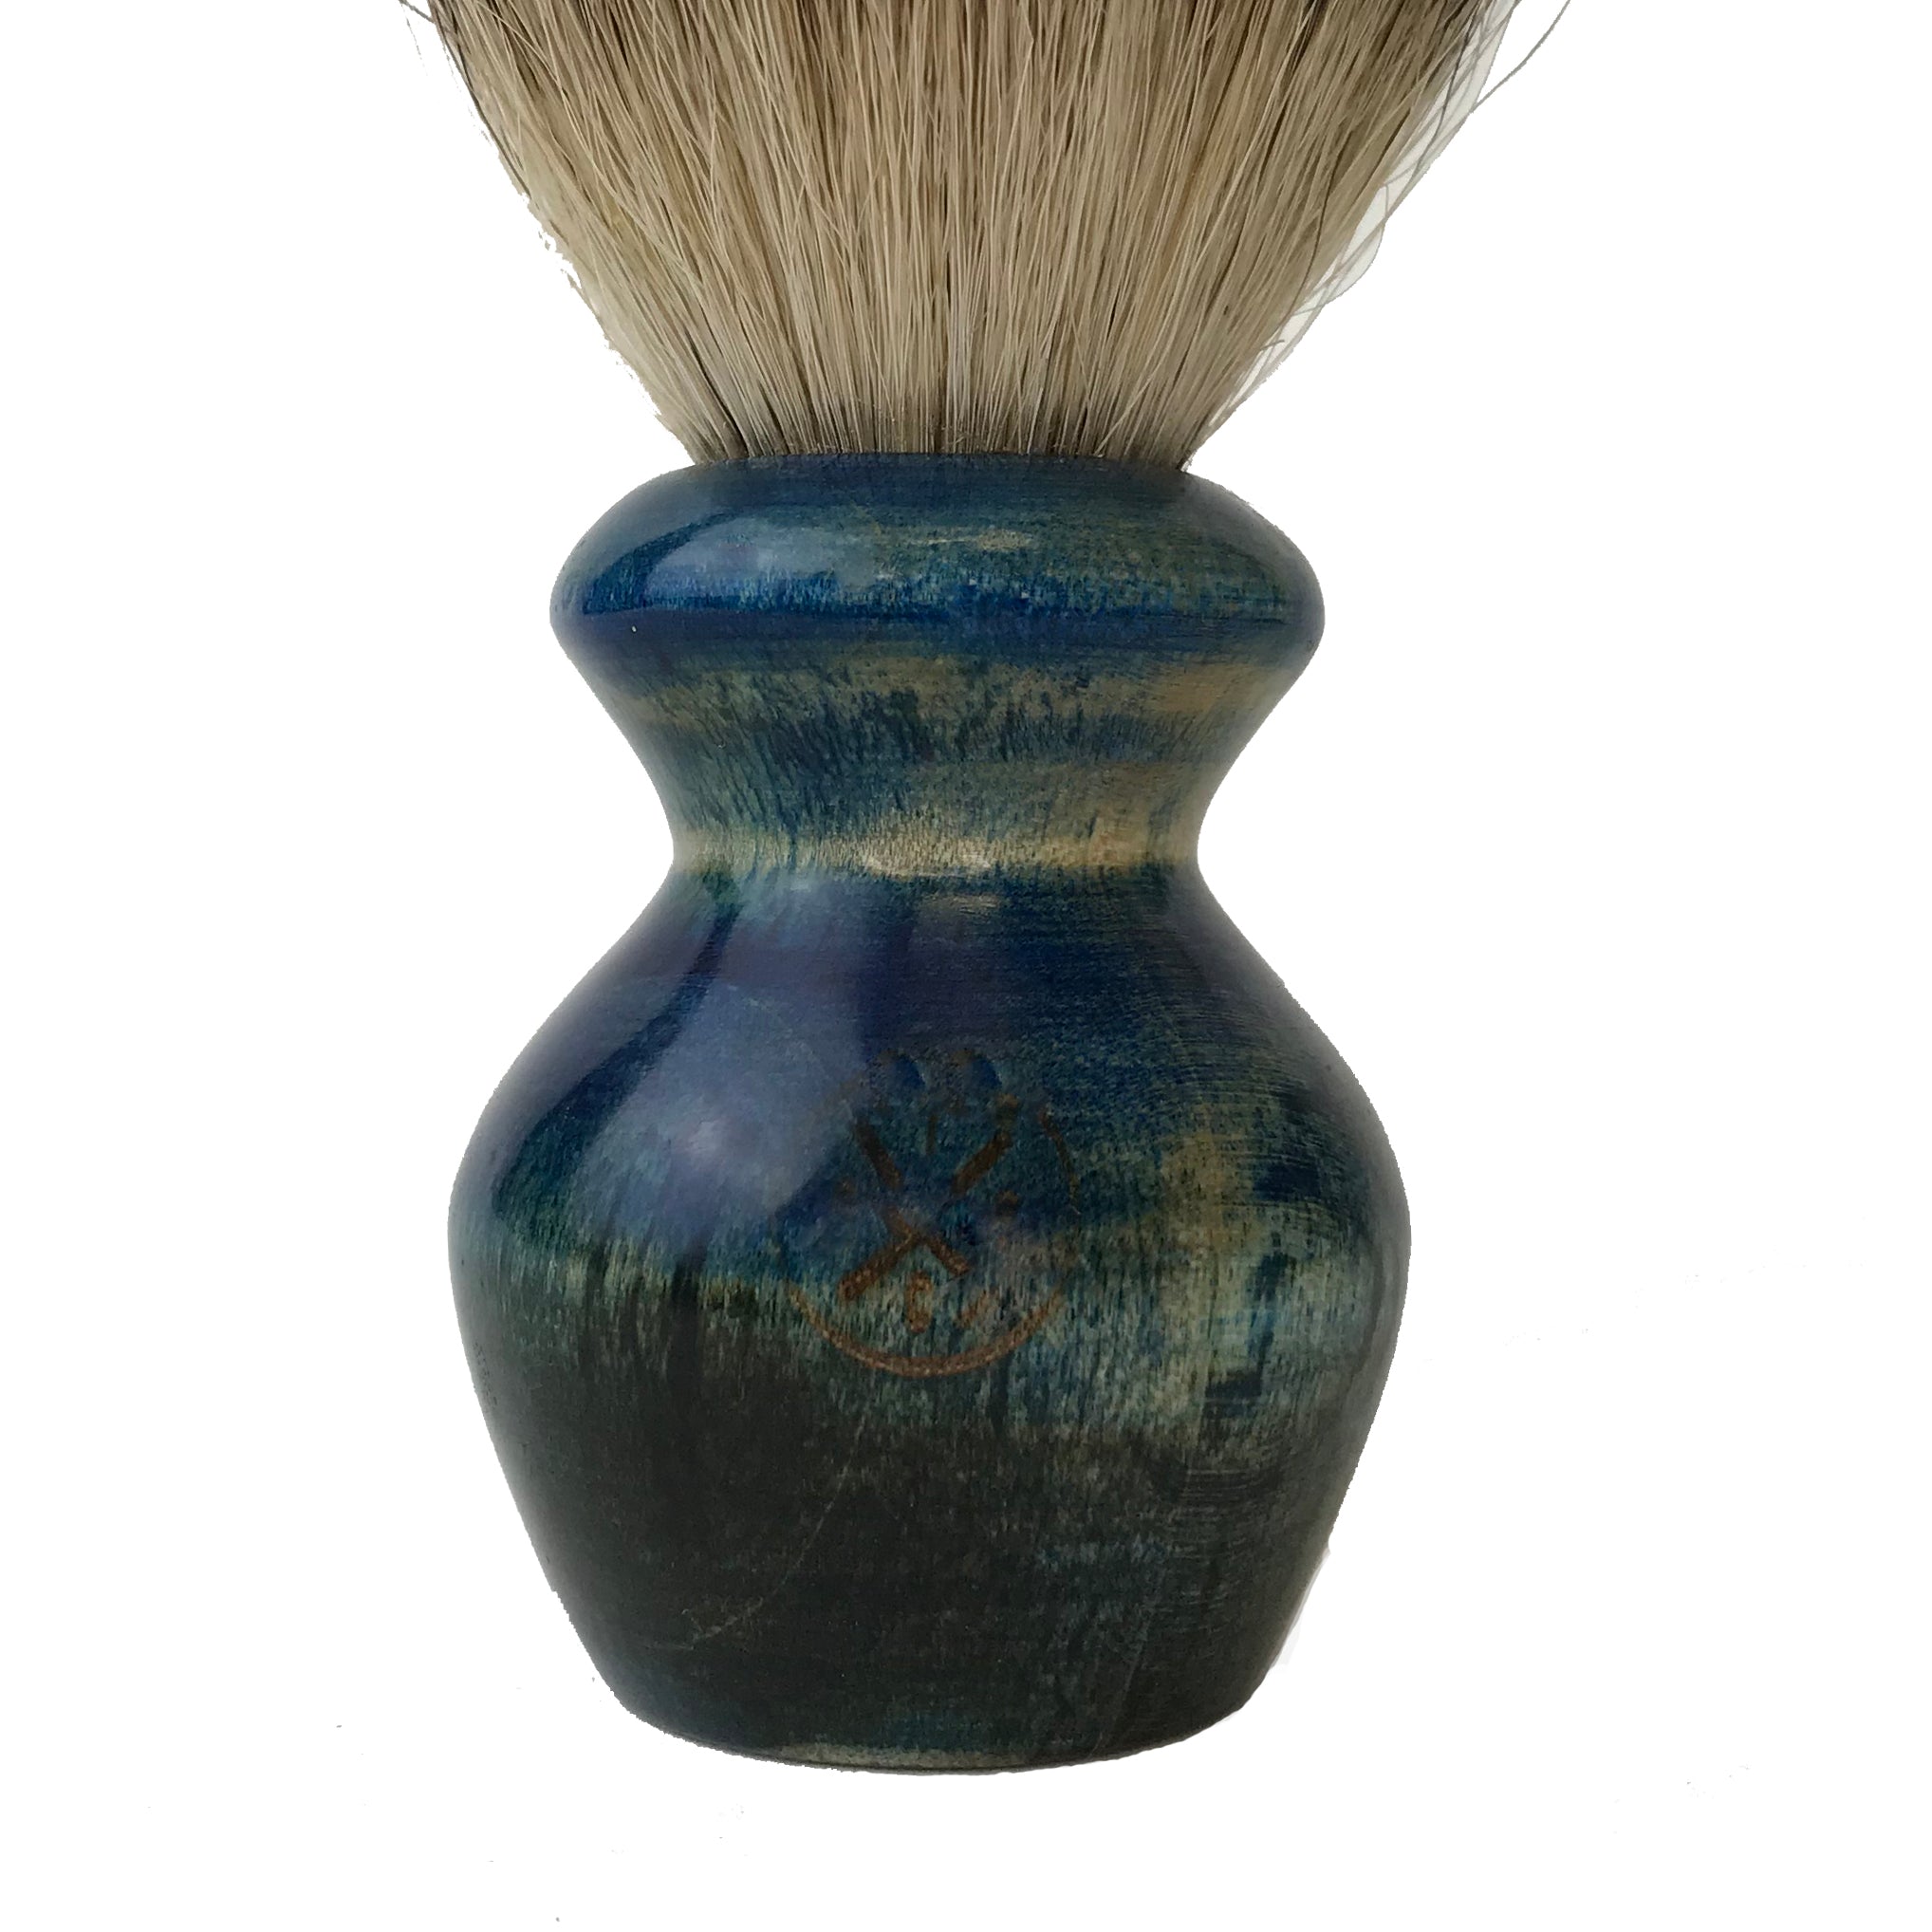 CTSC Original Shave Brush- Silver Maple, Blue & Teal